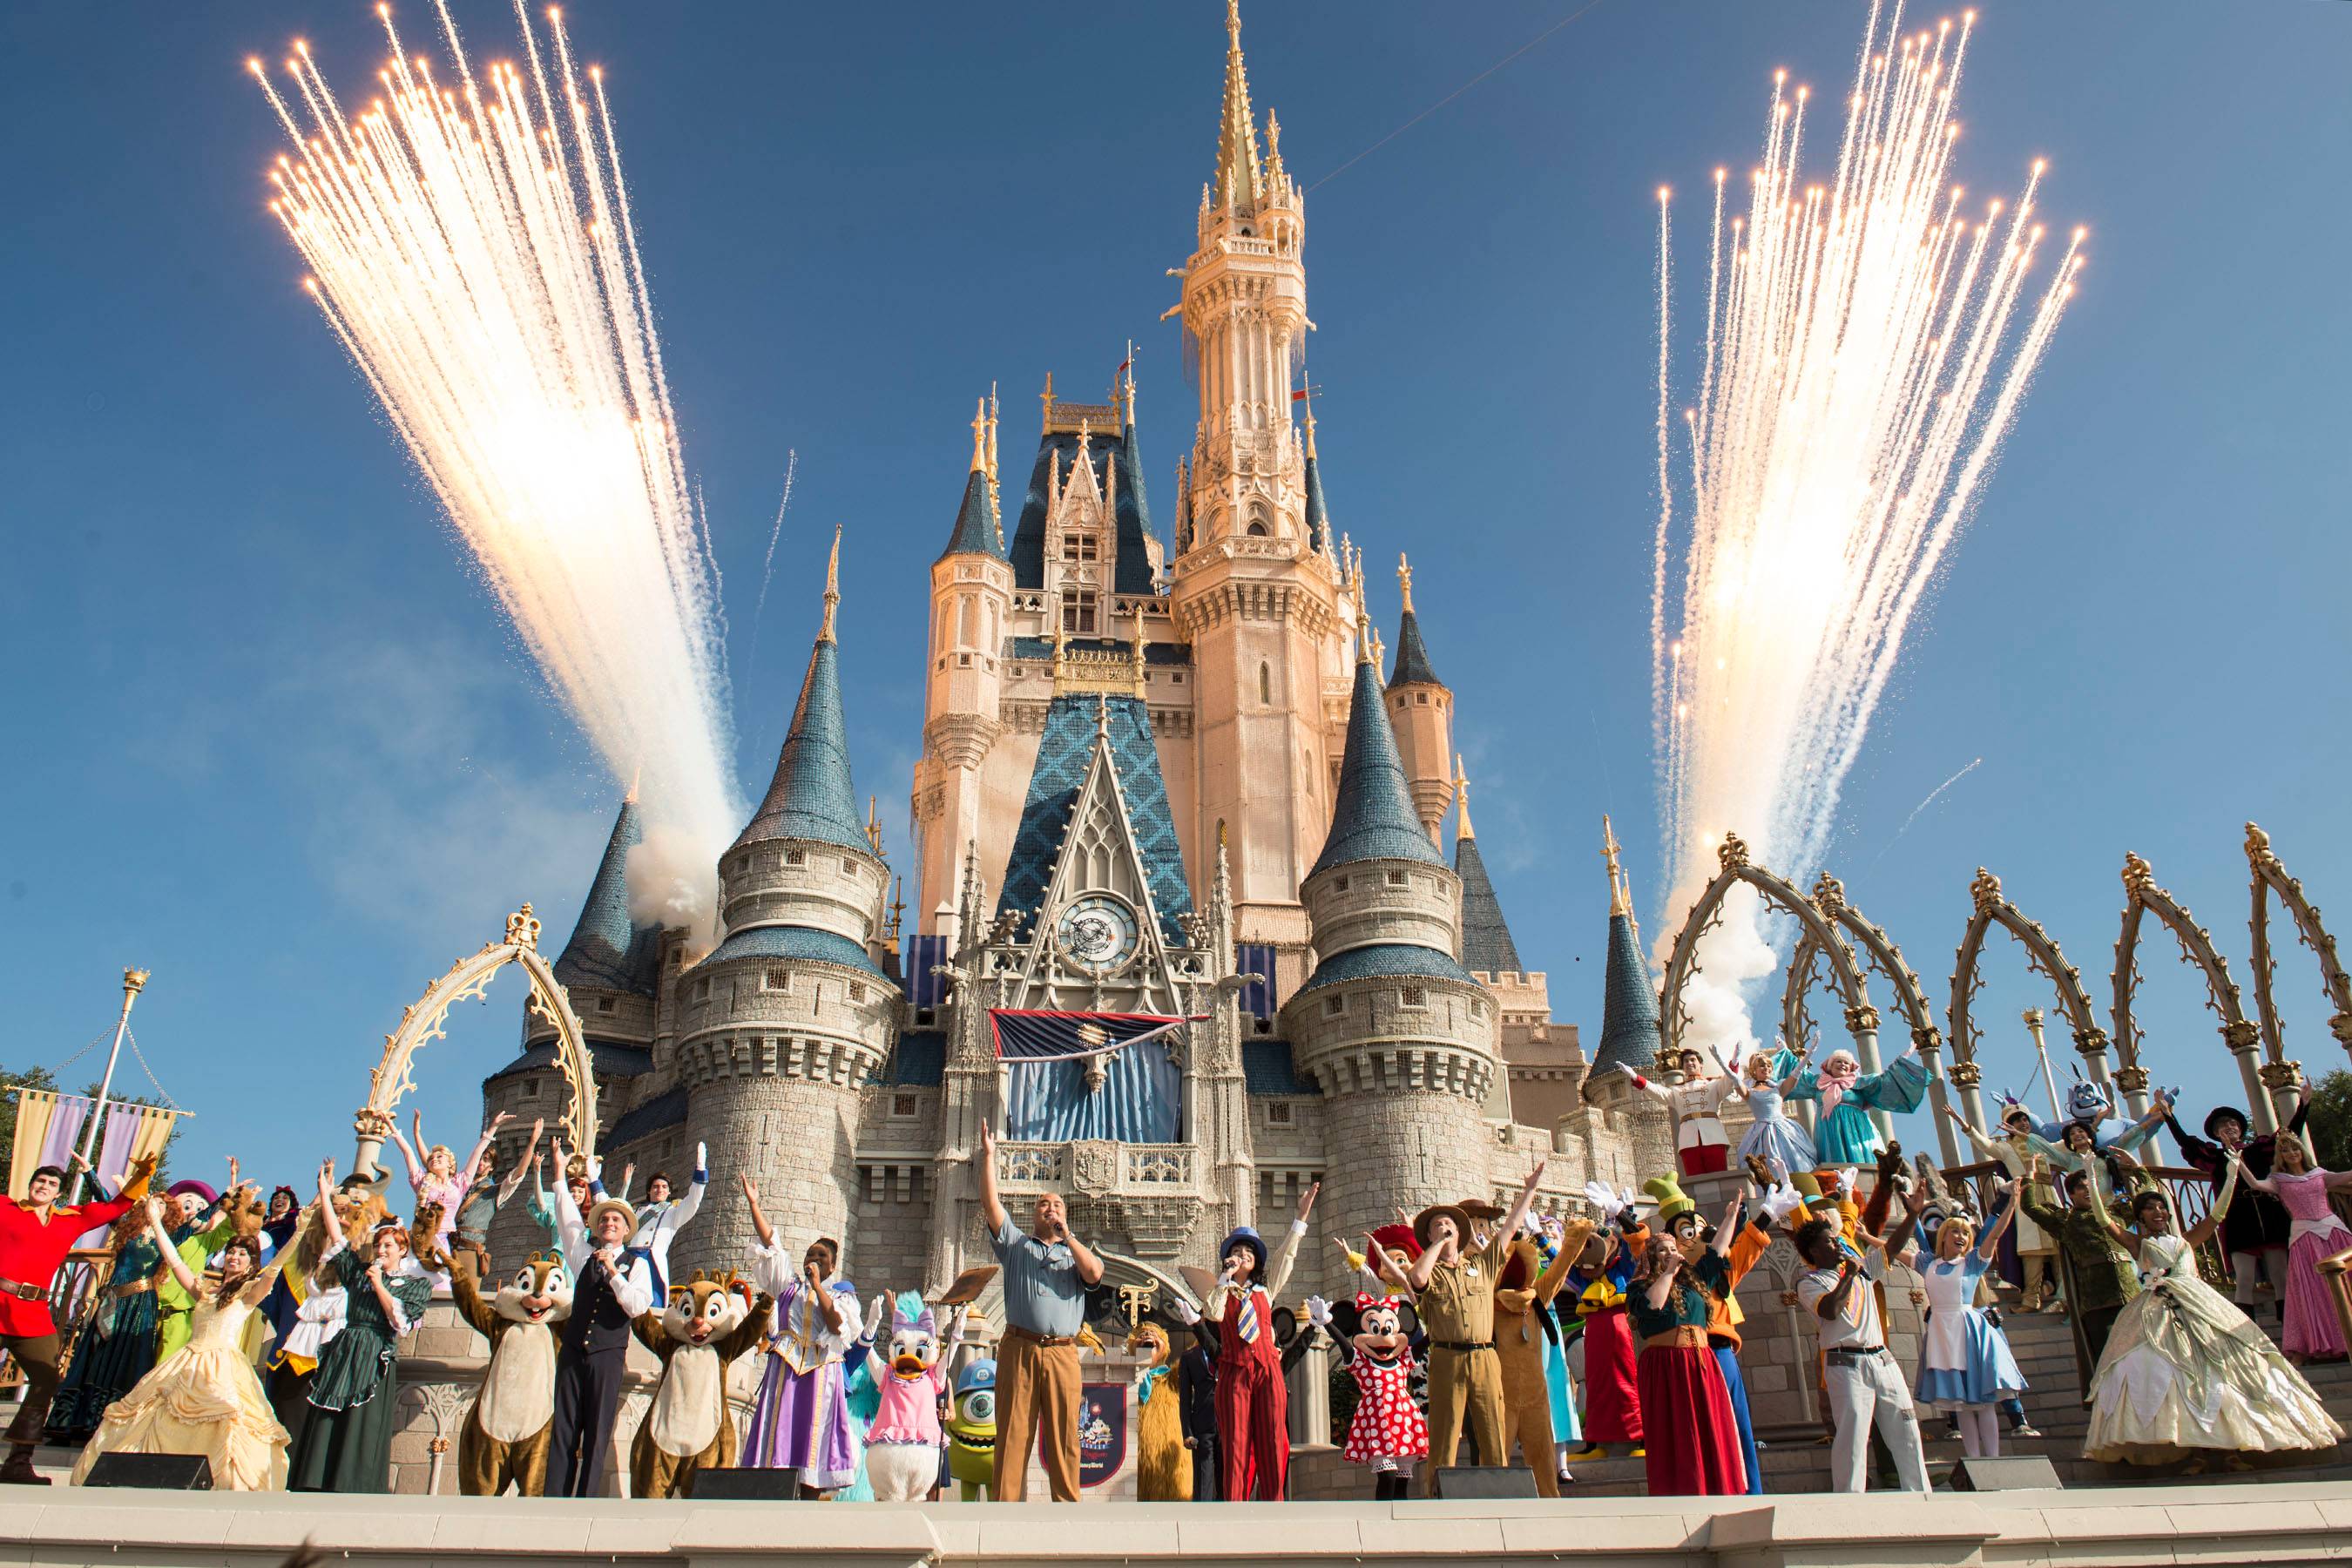 45 Walt Disney World Photos That Will Make You Believe in Magic - D23